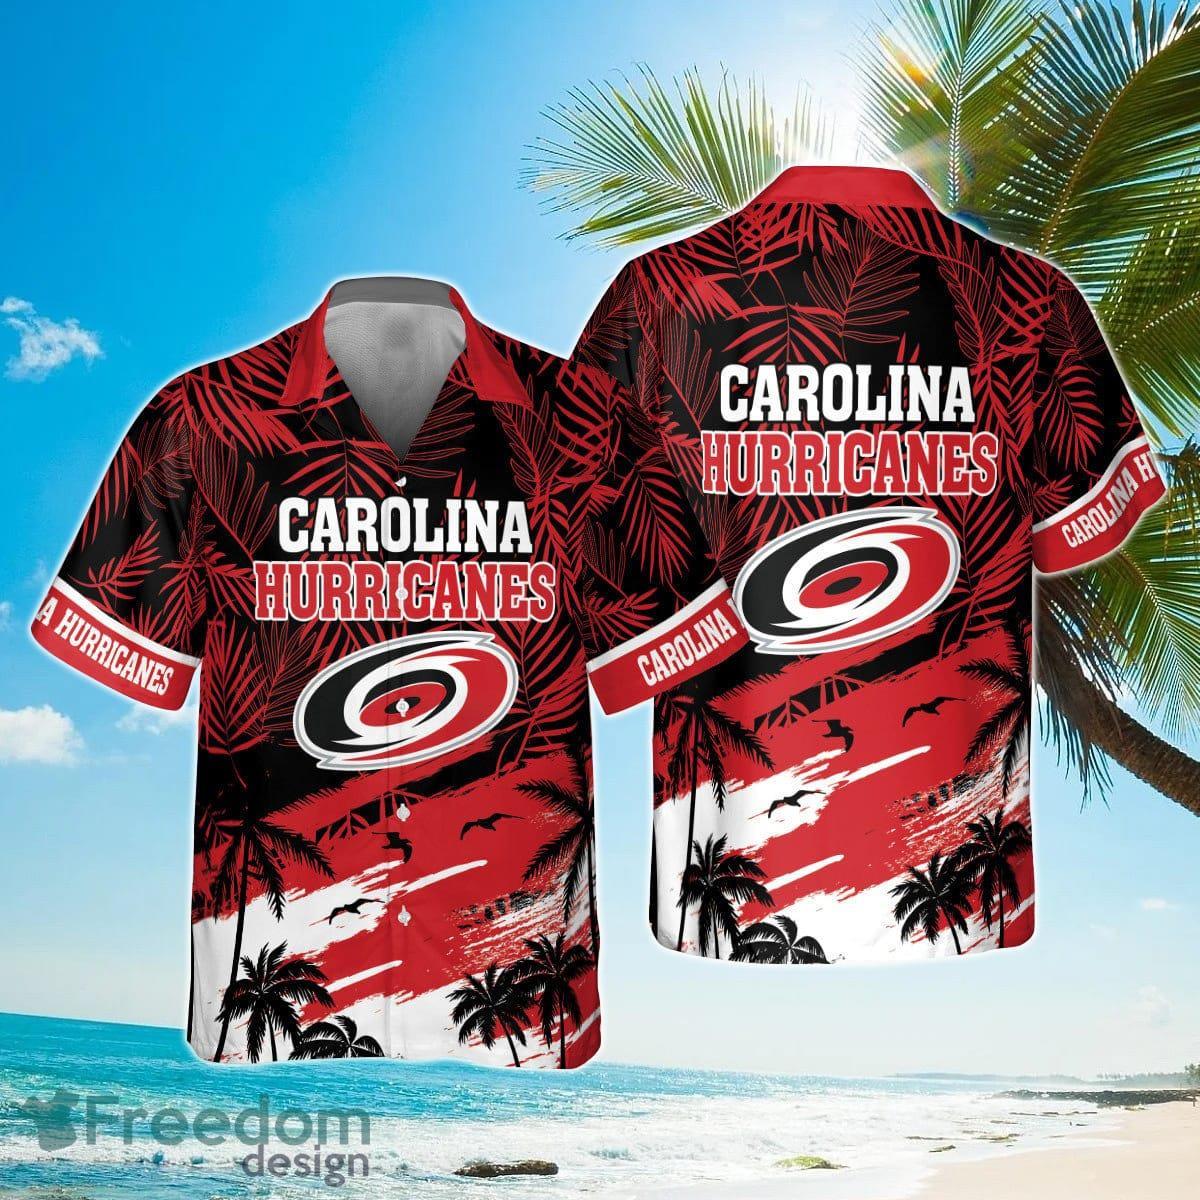 2023 Stanley Cup Playoffs Carolina Hurricanes Shirt - Shirtnewus